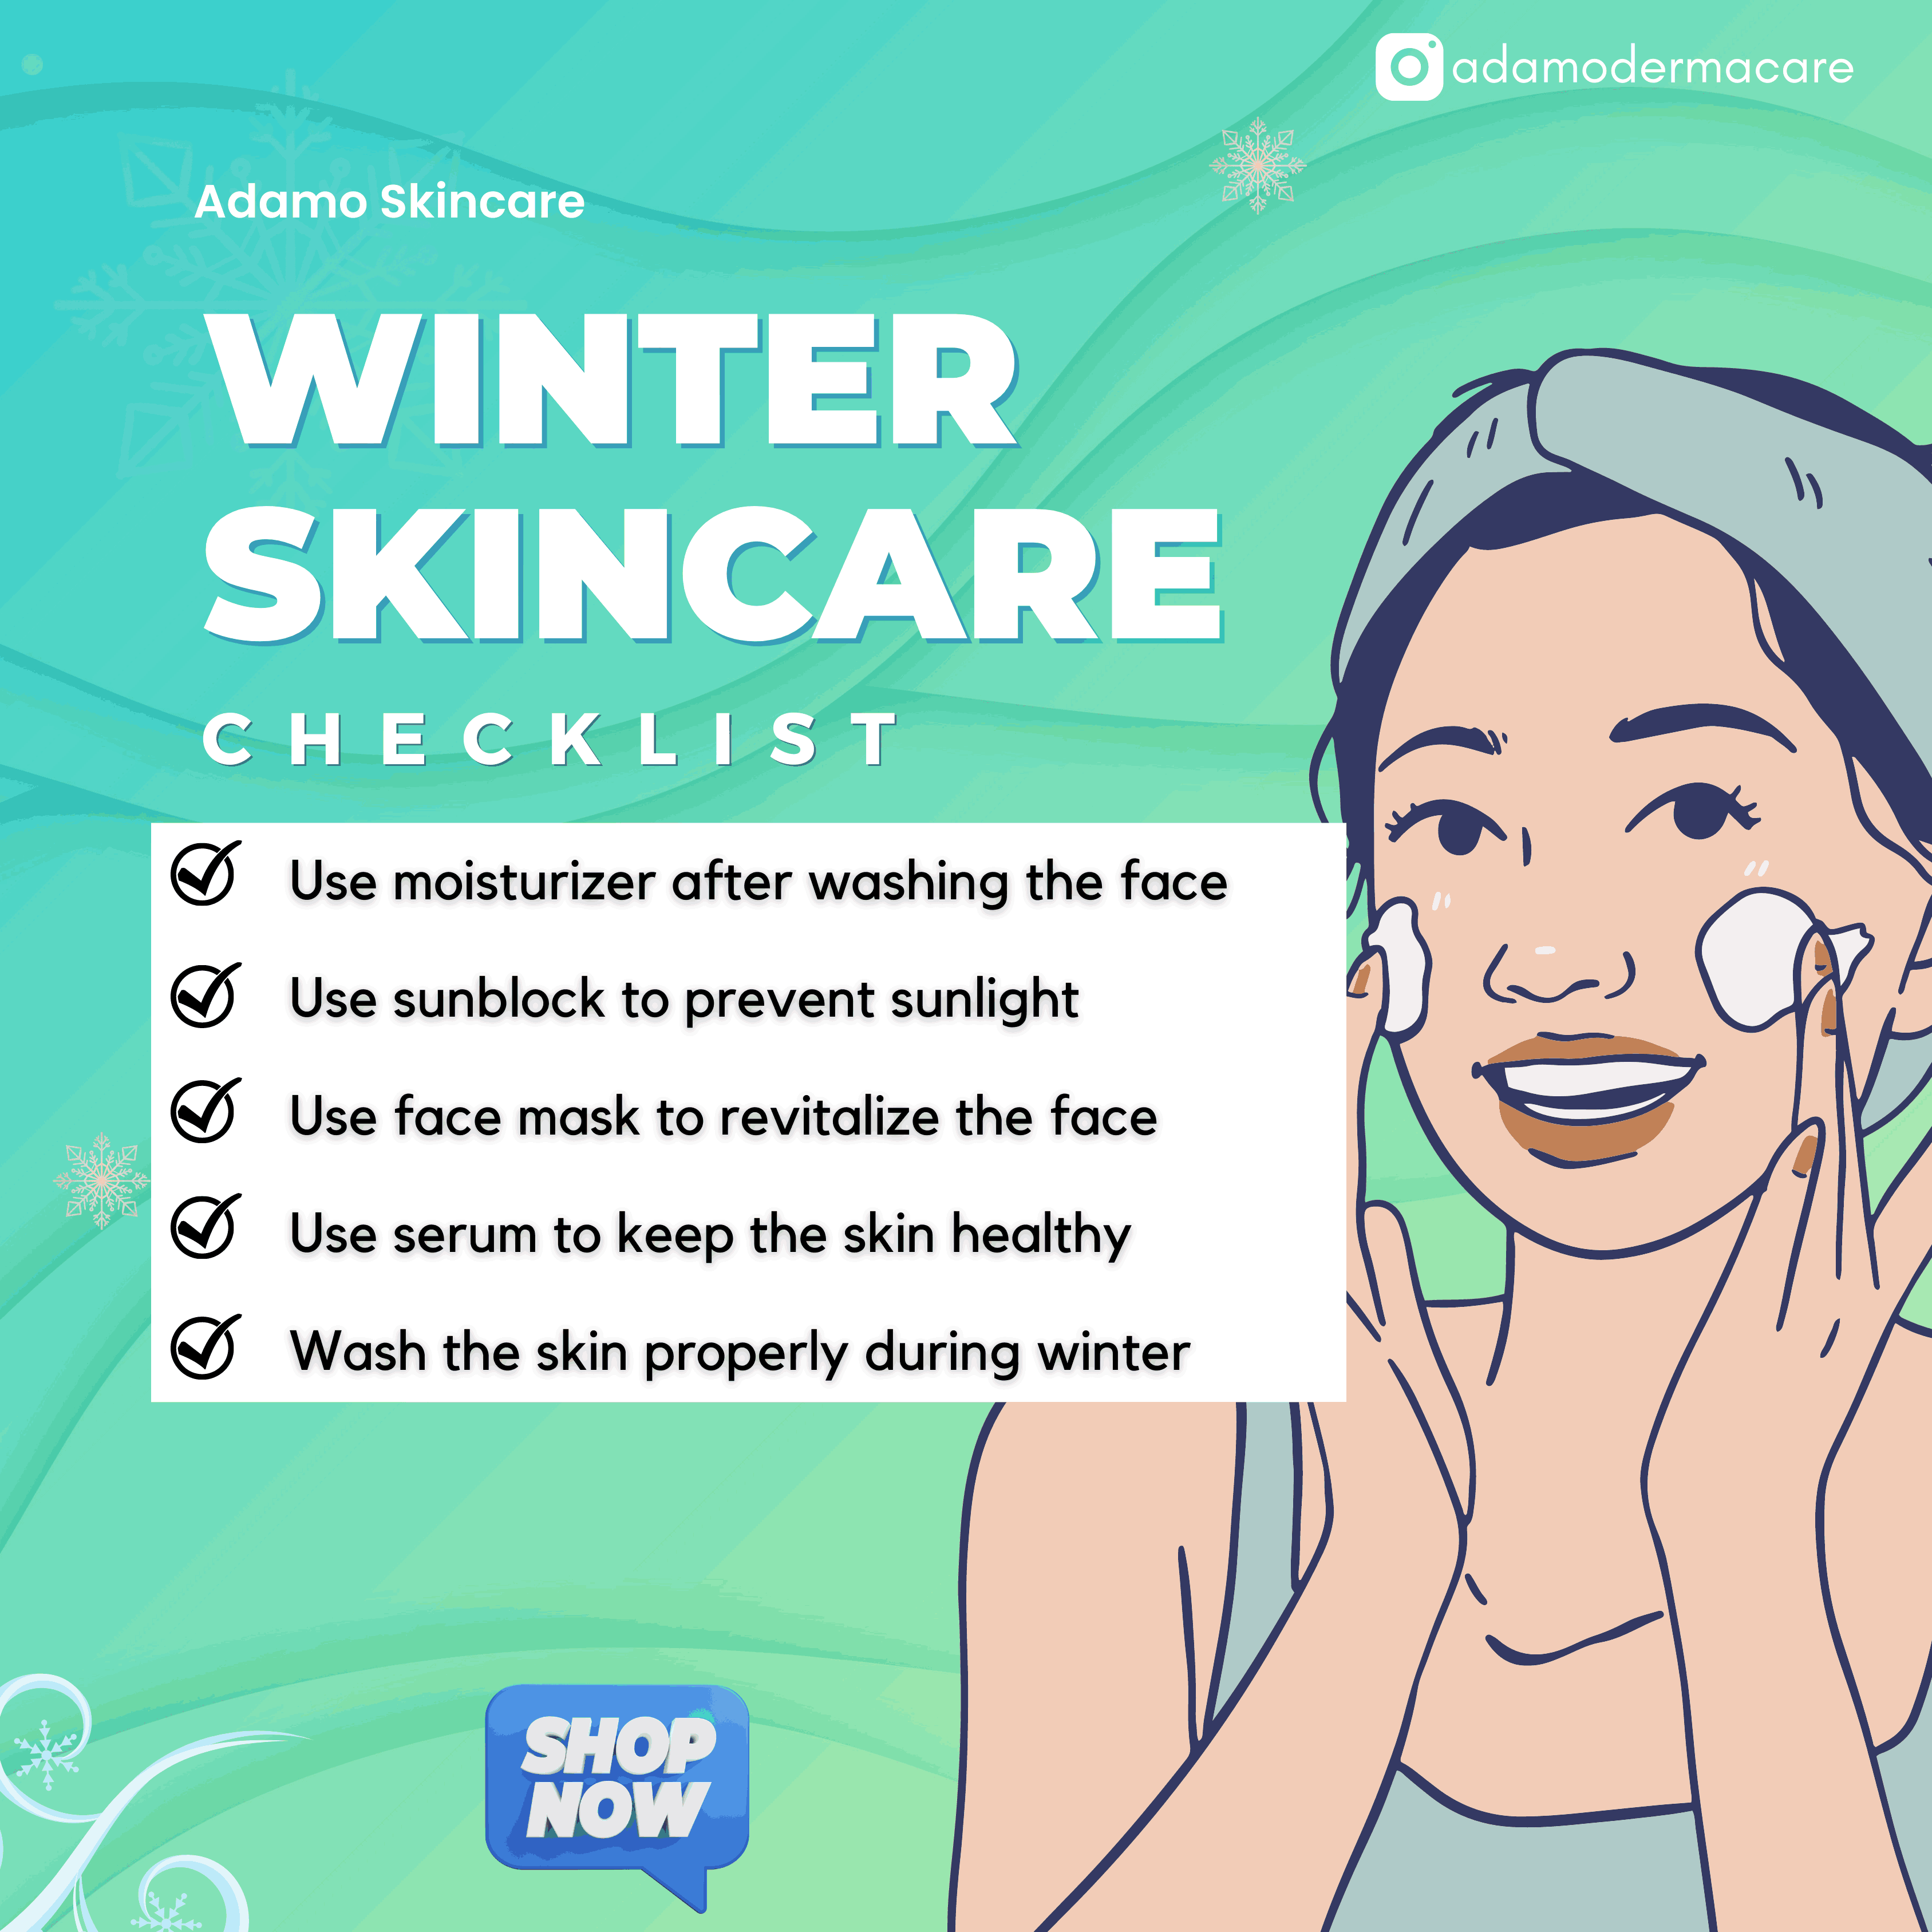 Winter Skincare Tips from Adamo Skincare